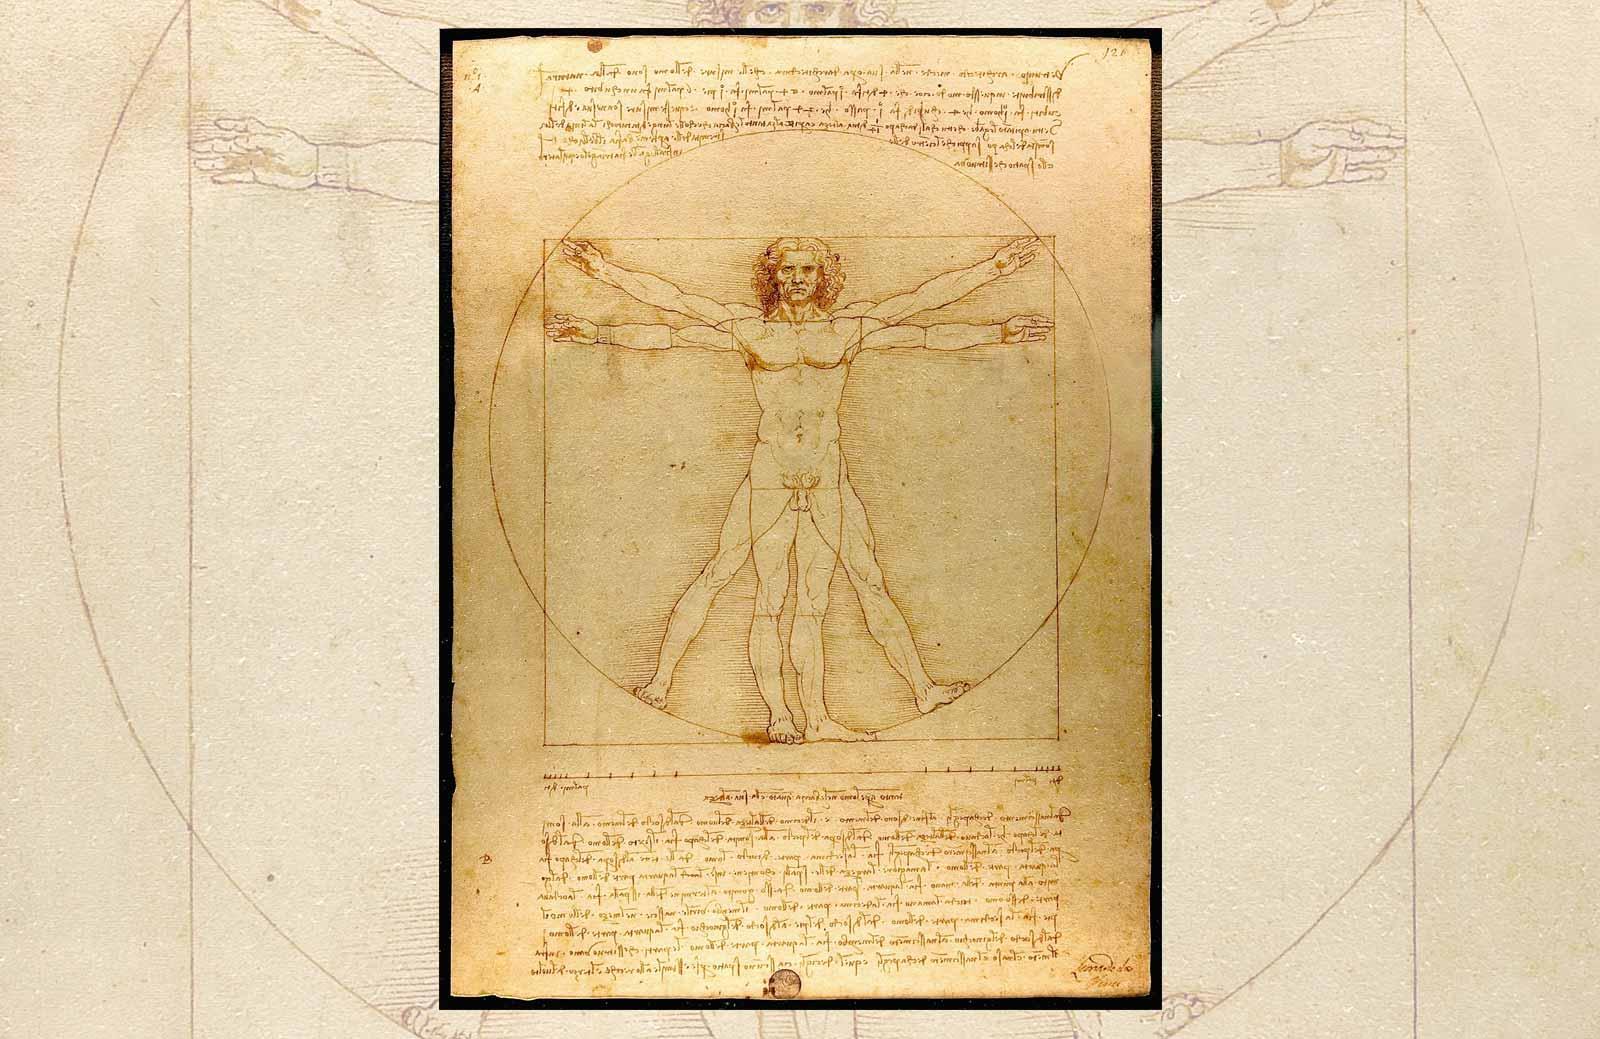 Leonardo da Vinci, Vitruvian Man, c. 1490.